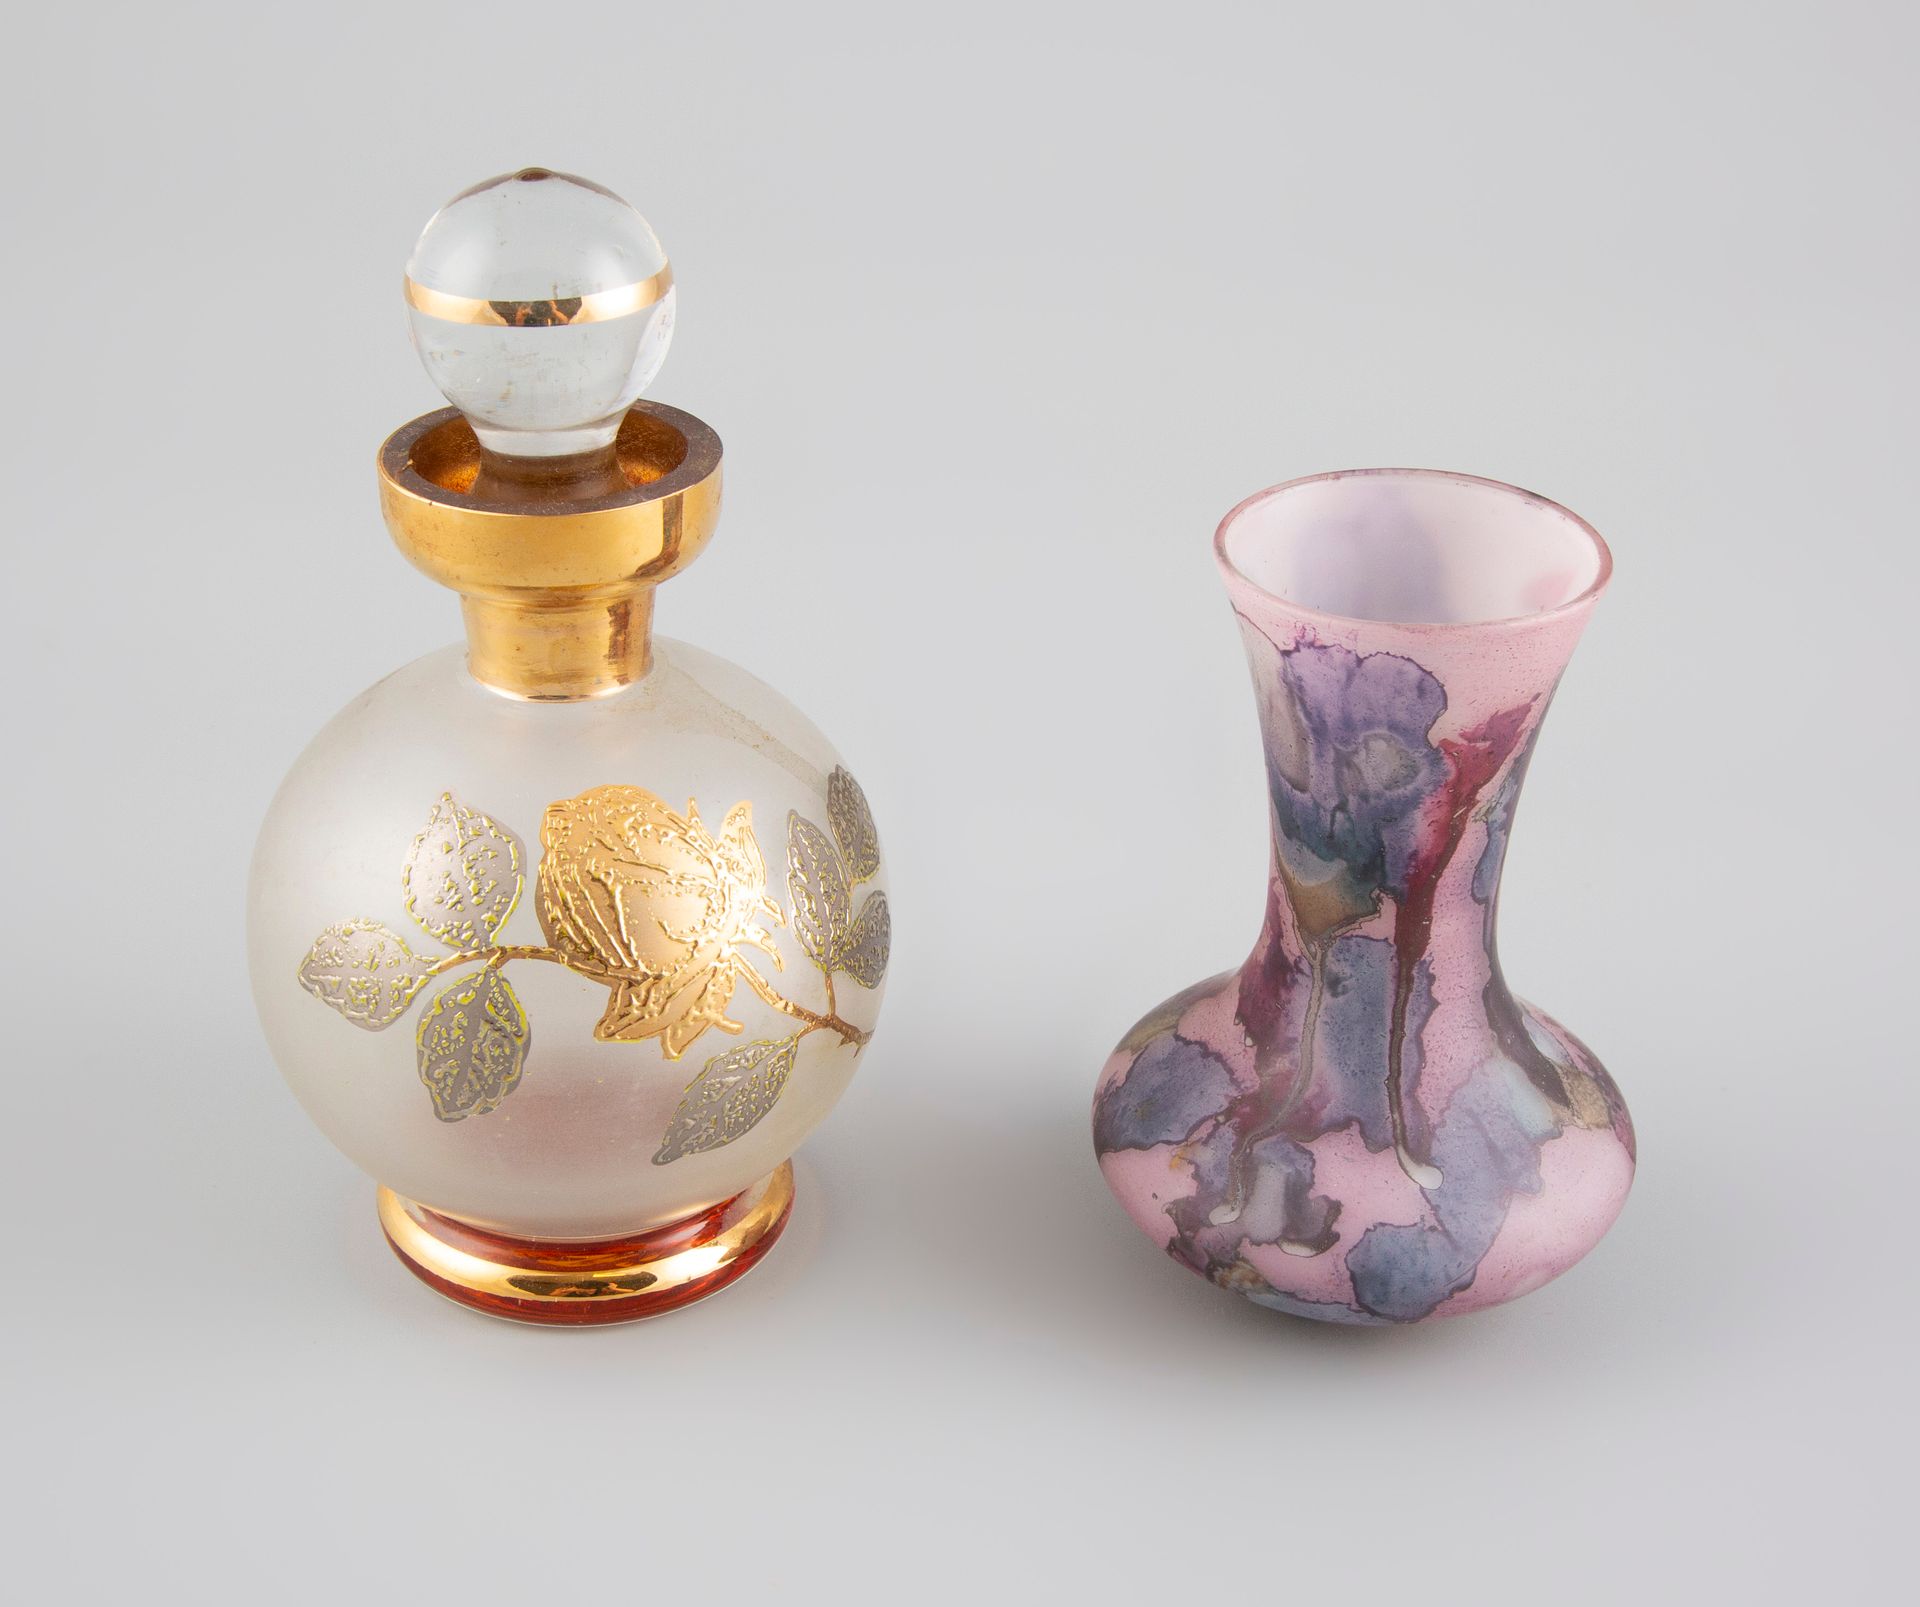 Null 刻有花纹的玻璃香水瓶。附有一个紫罗兰色的吹制玻璃小花瓶。高11厘米。